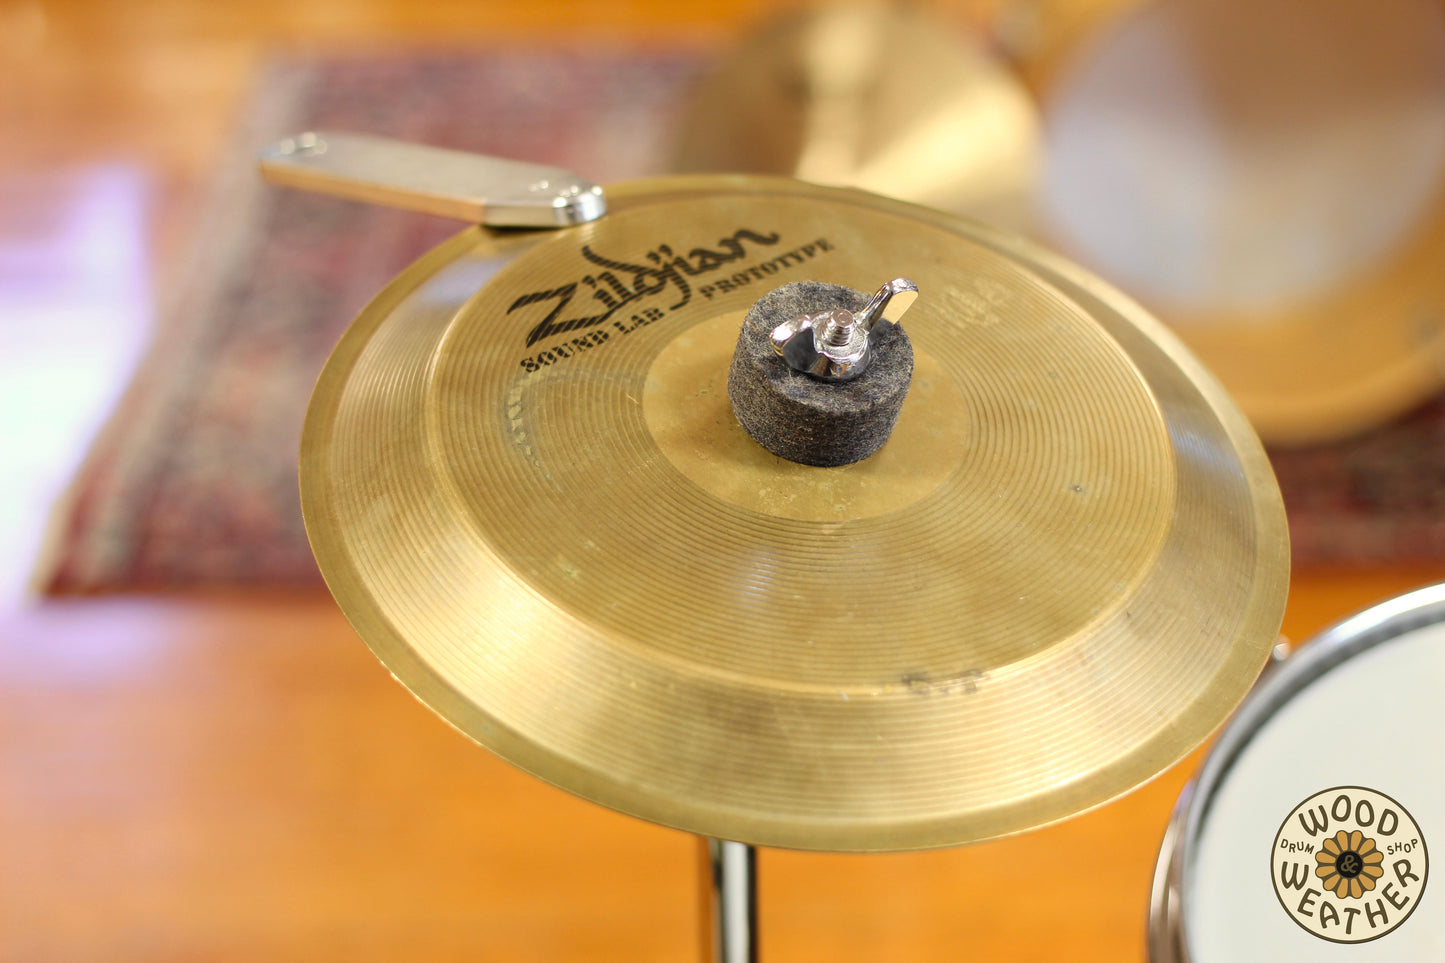 Zildjian Sound Lab Prototype 8" Frying Pan Cymbal 435g - USED